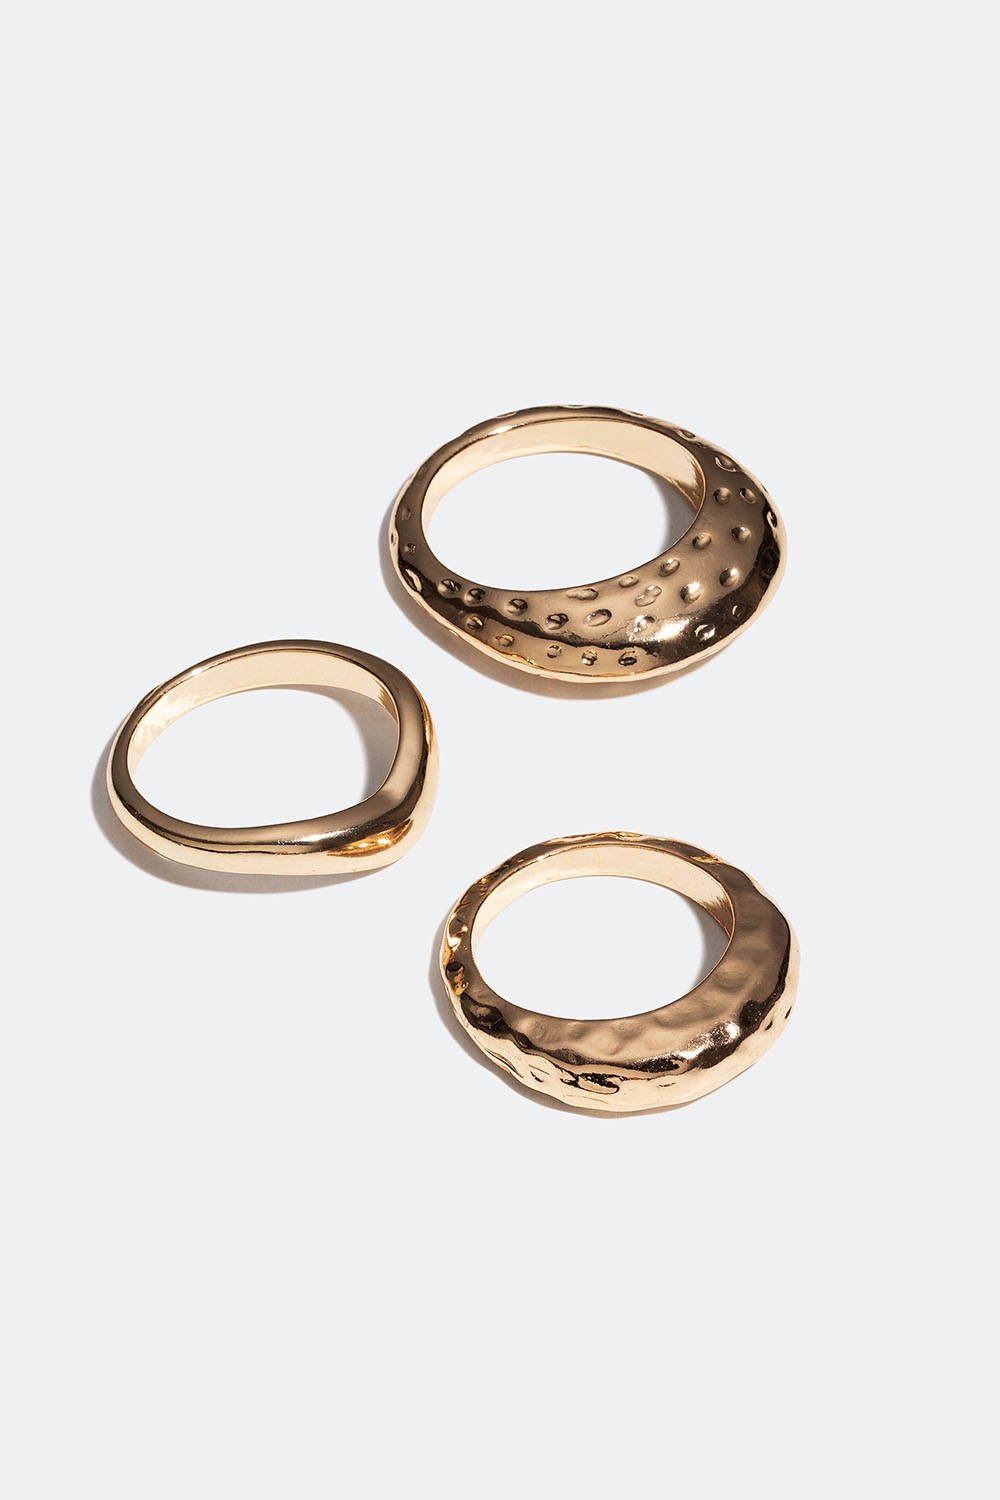 Guldfarvede ringe i glat og hamret design, 3-pak i gruppen Smykker / Ringe / Flerpak hos Glitter (256001032016)